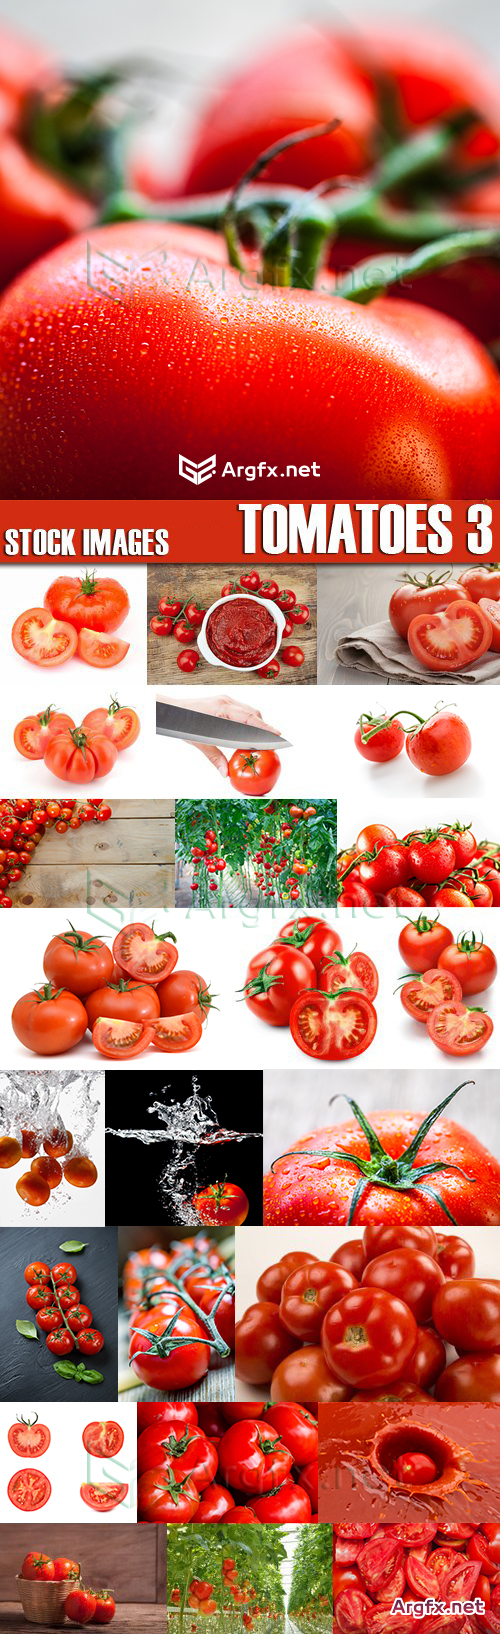  Stock Photos - Tomatoes 3, 25xJPG